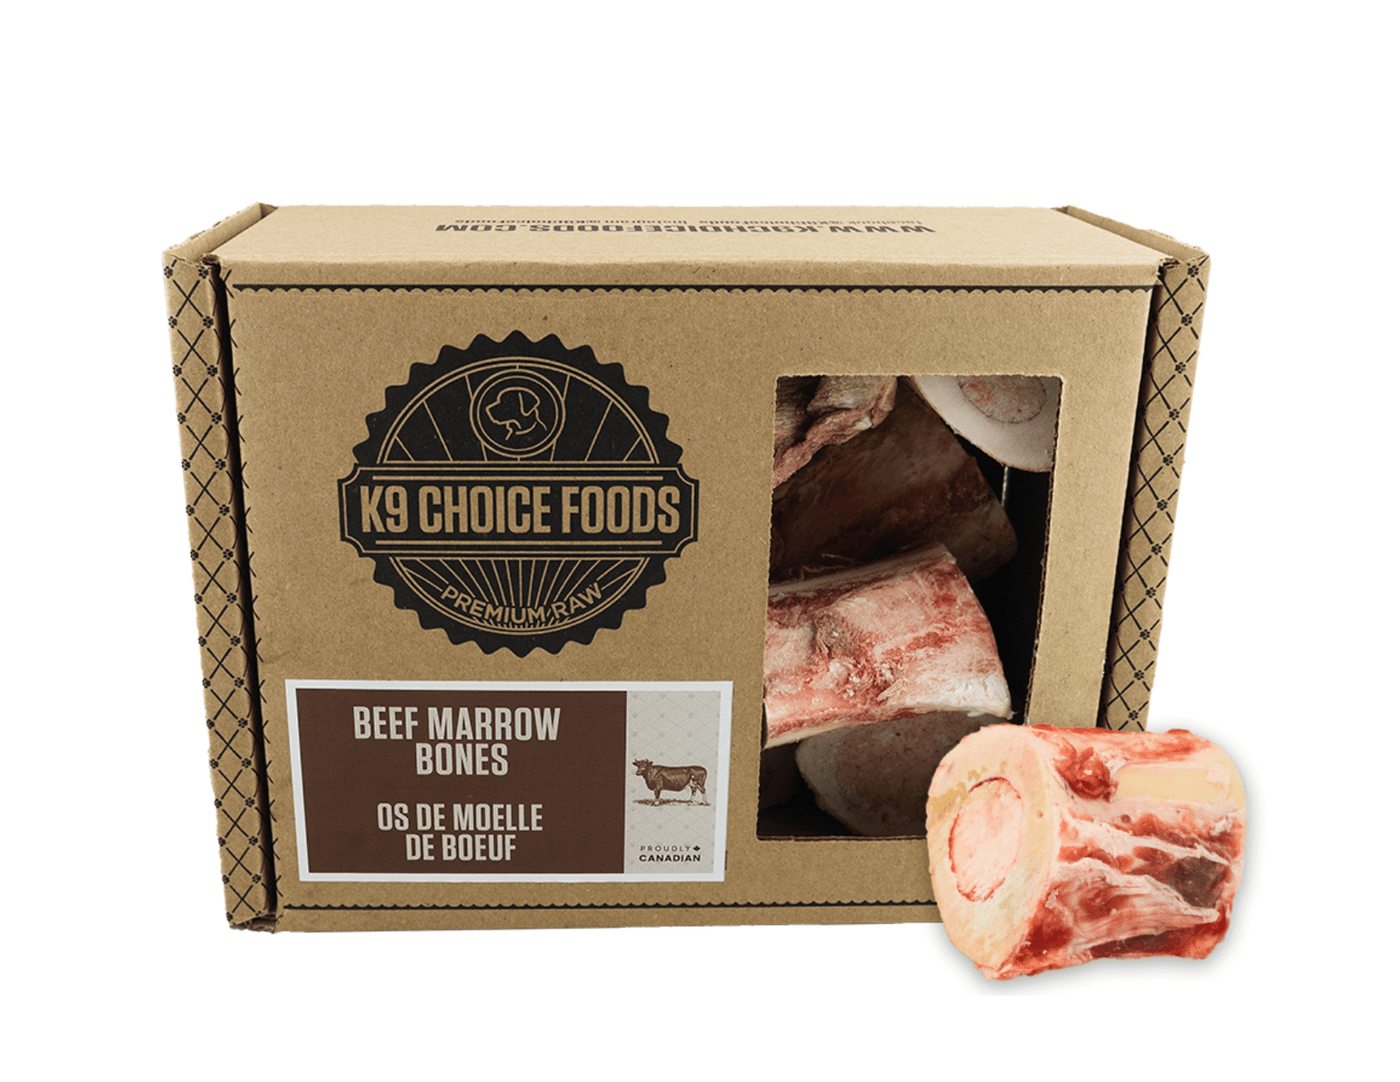 K9 Choice - Beef Marrow Bones 1.36kg/3lb (min) - Frozen Raw Dog Chew - PetToba-K9 Choice Foods